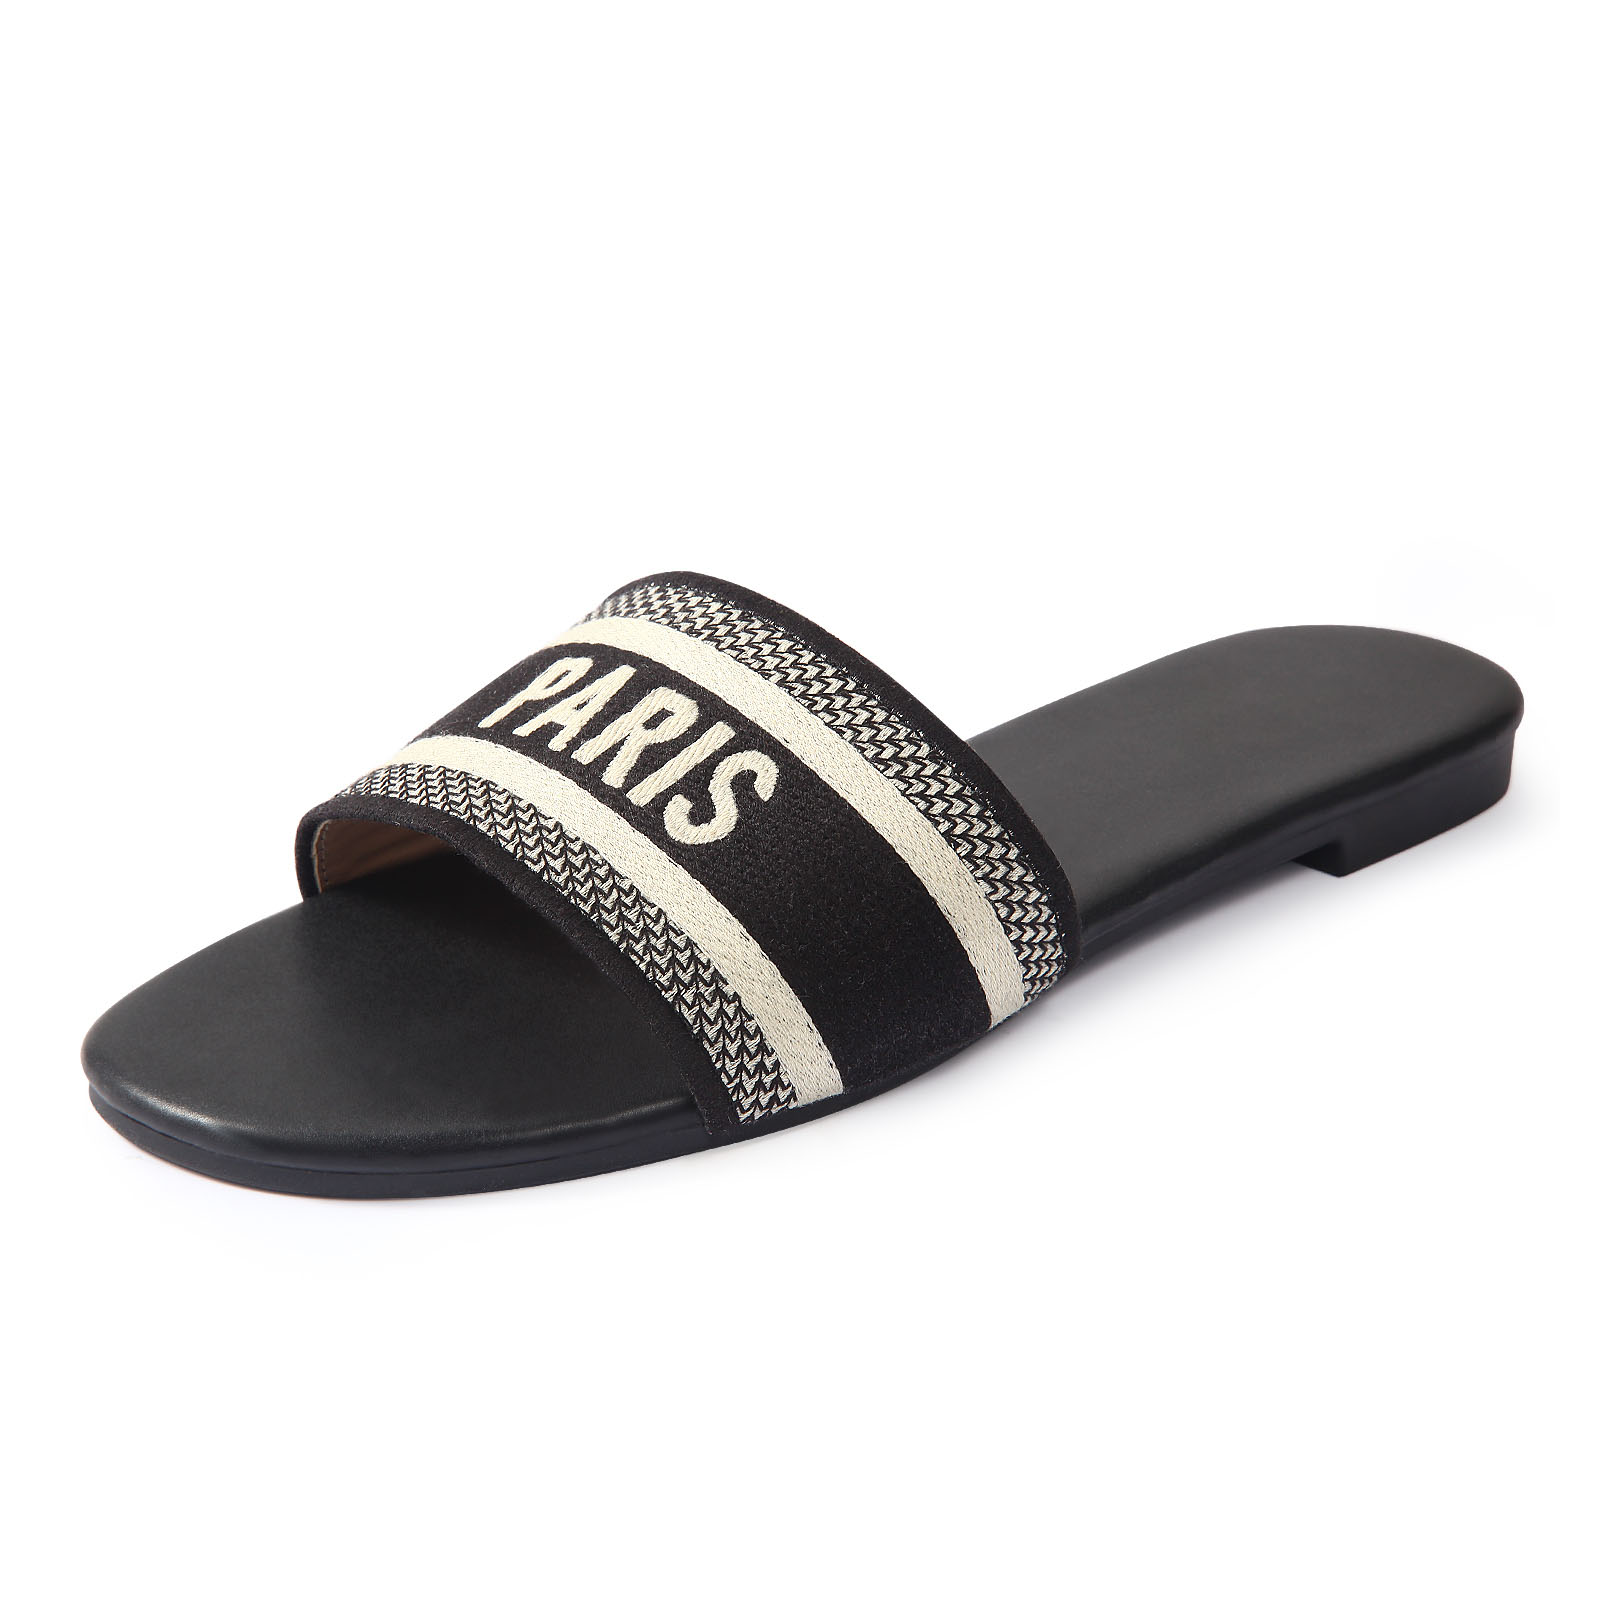 Women's Flat Sandals Casual Beach Sandals Slippers for Summer